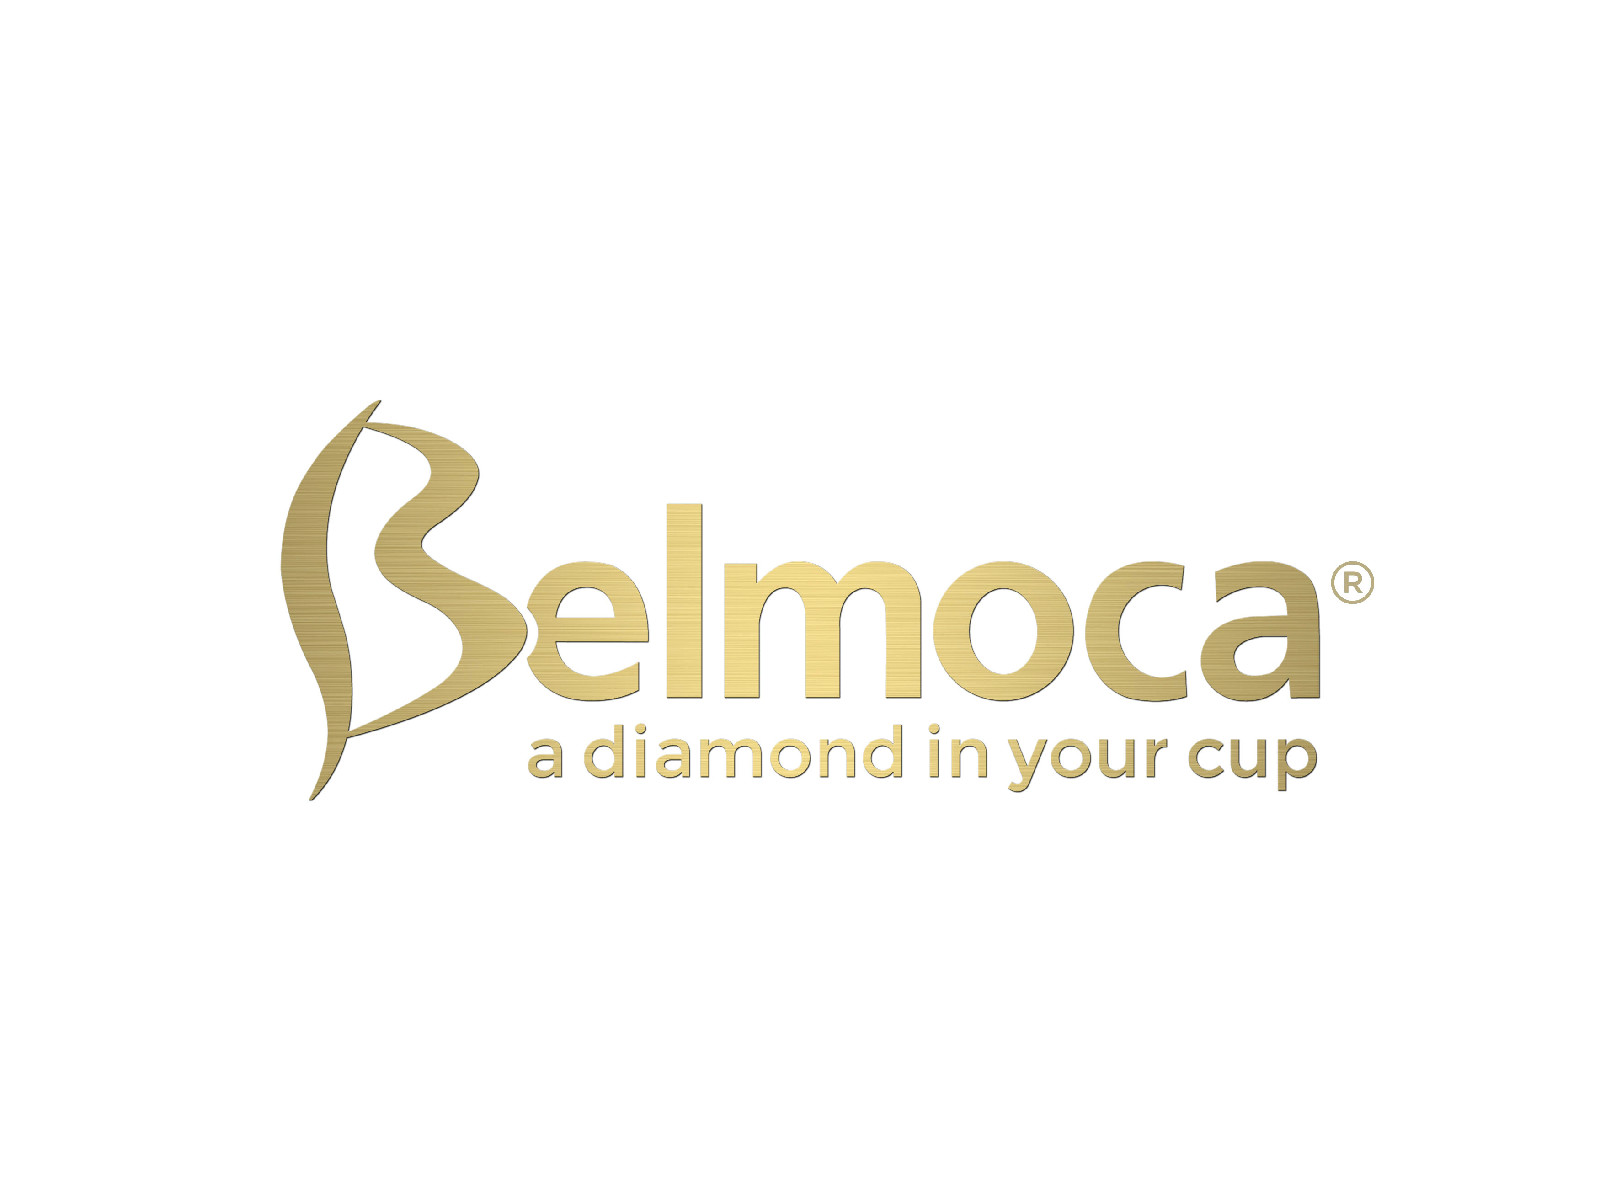 Belmoca